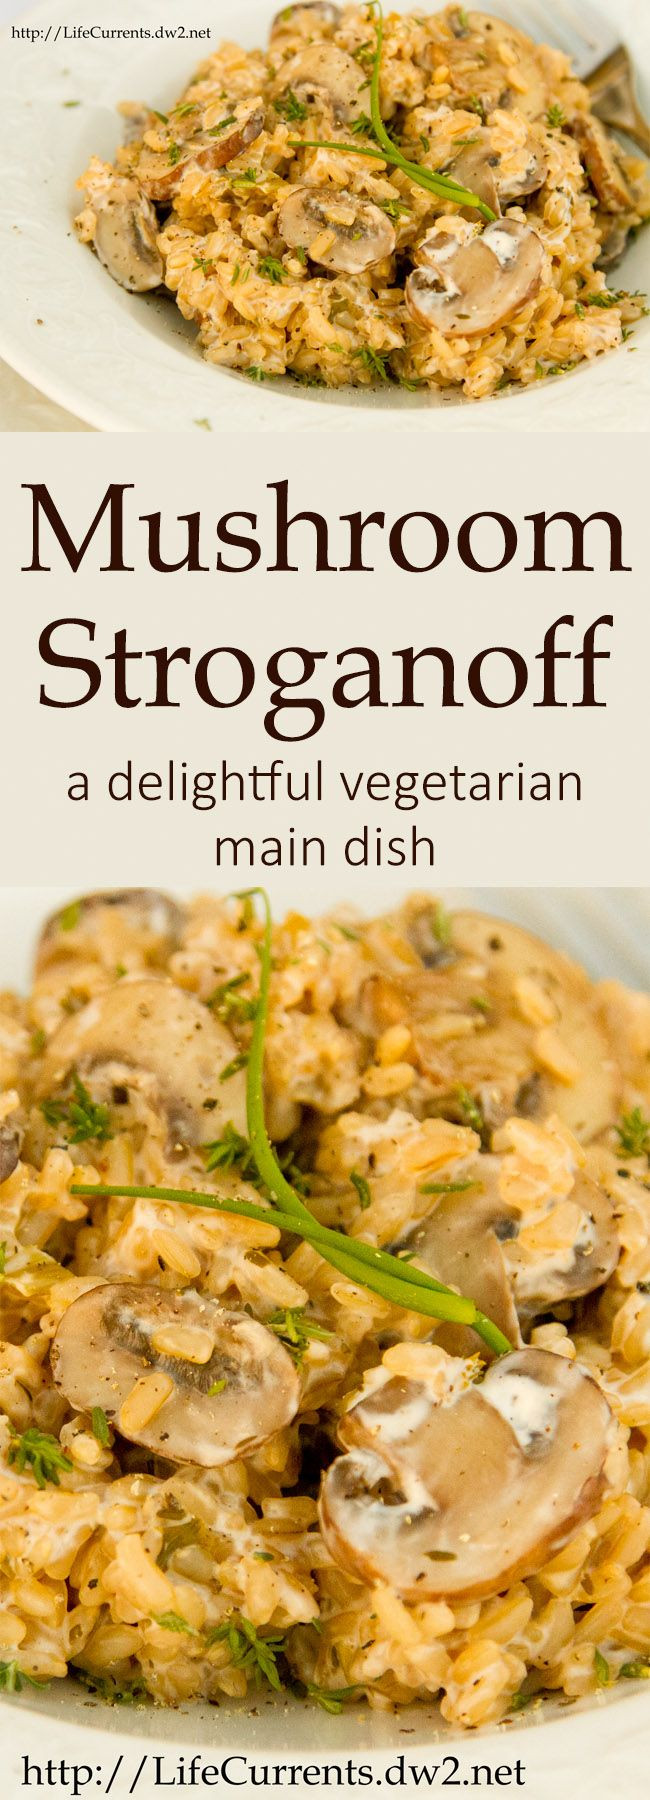 Mushroom Main Dish Recipes Healthy
 Mushroom Stroganoff a delightful ve arian main dish